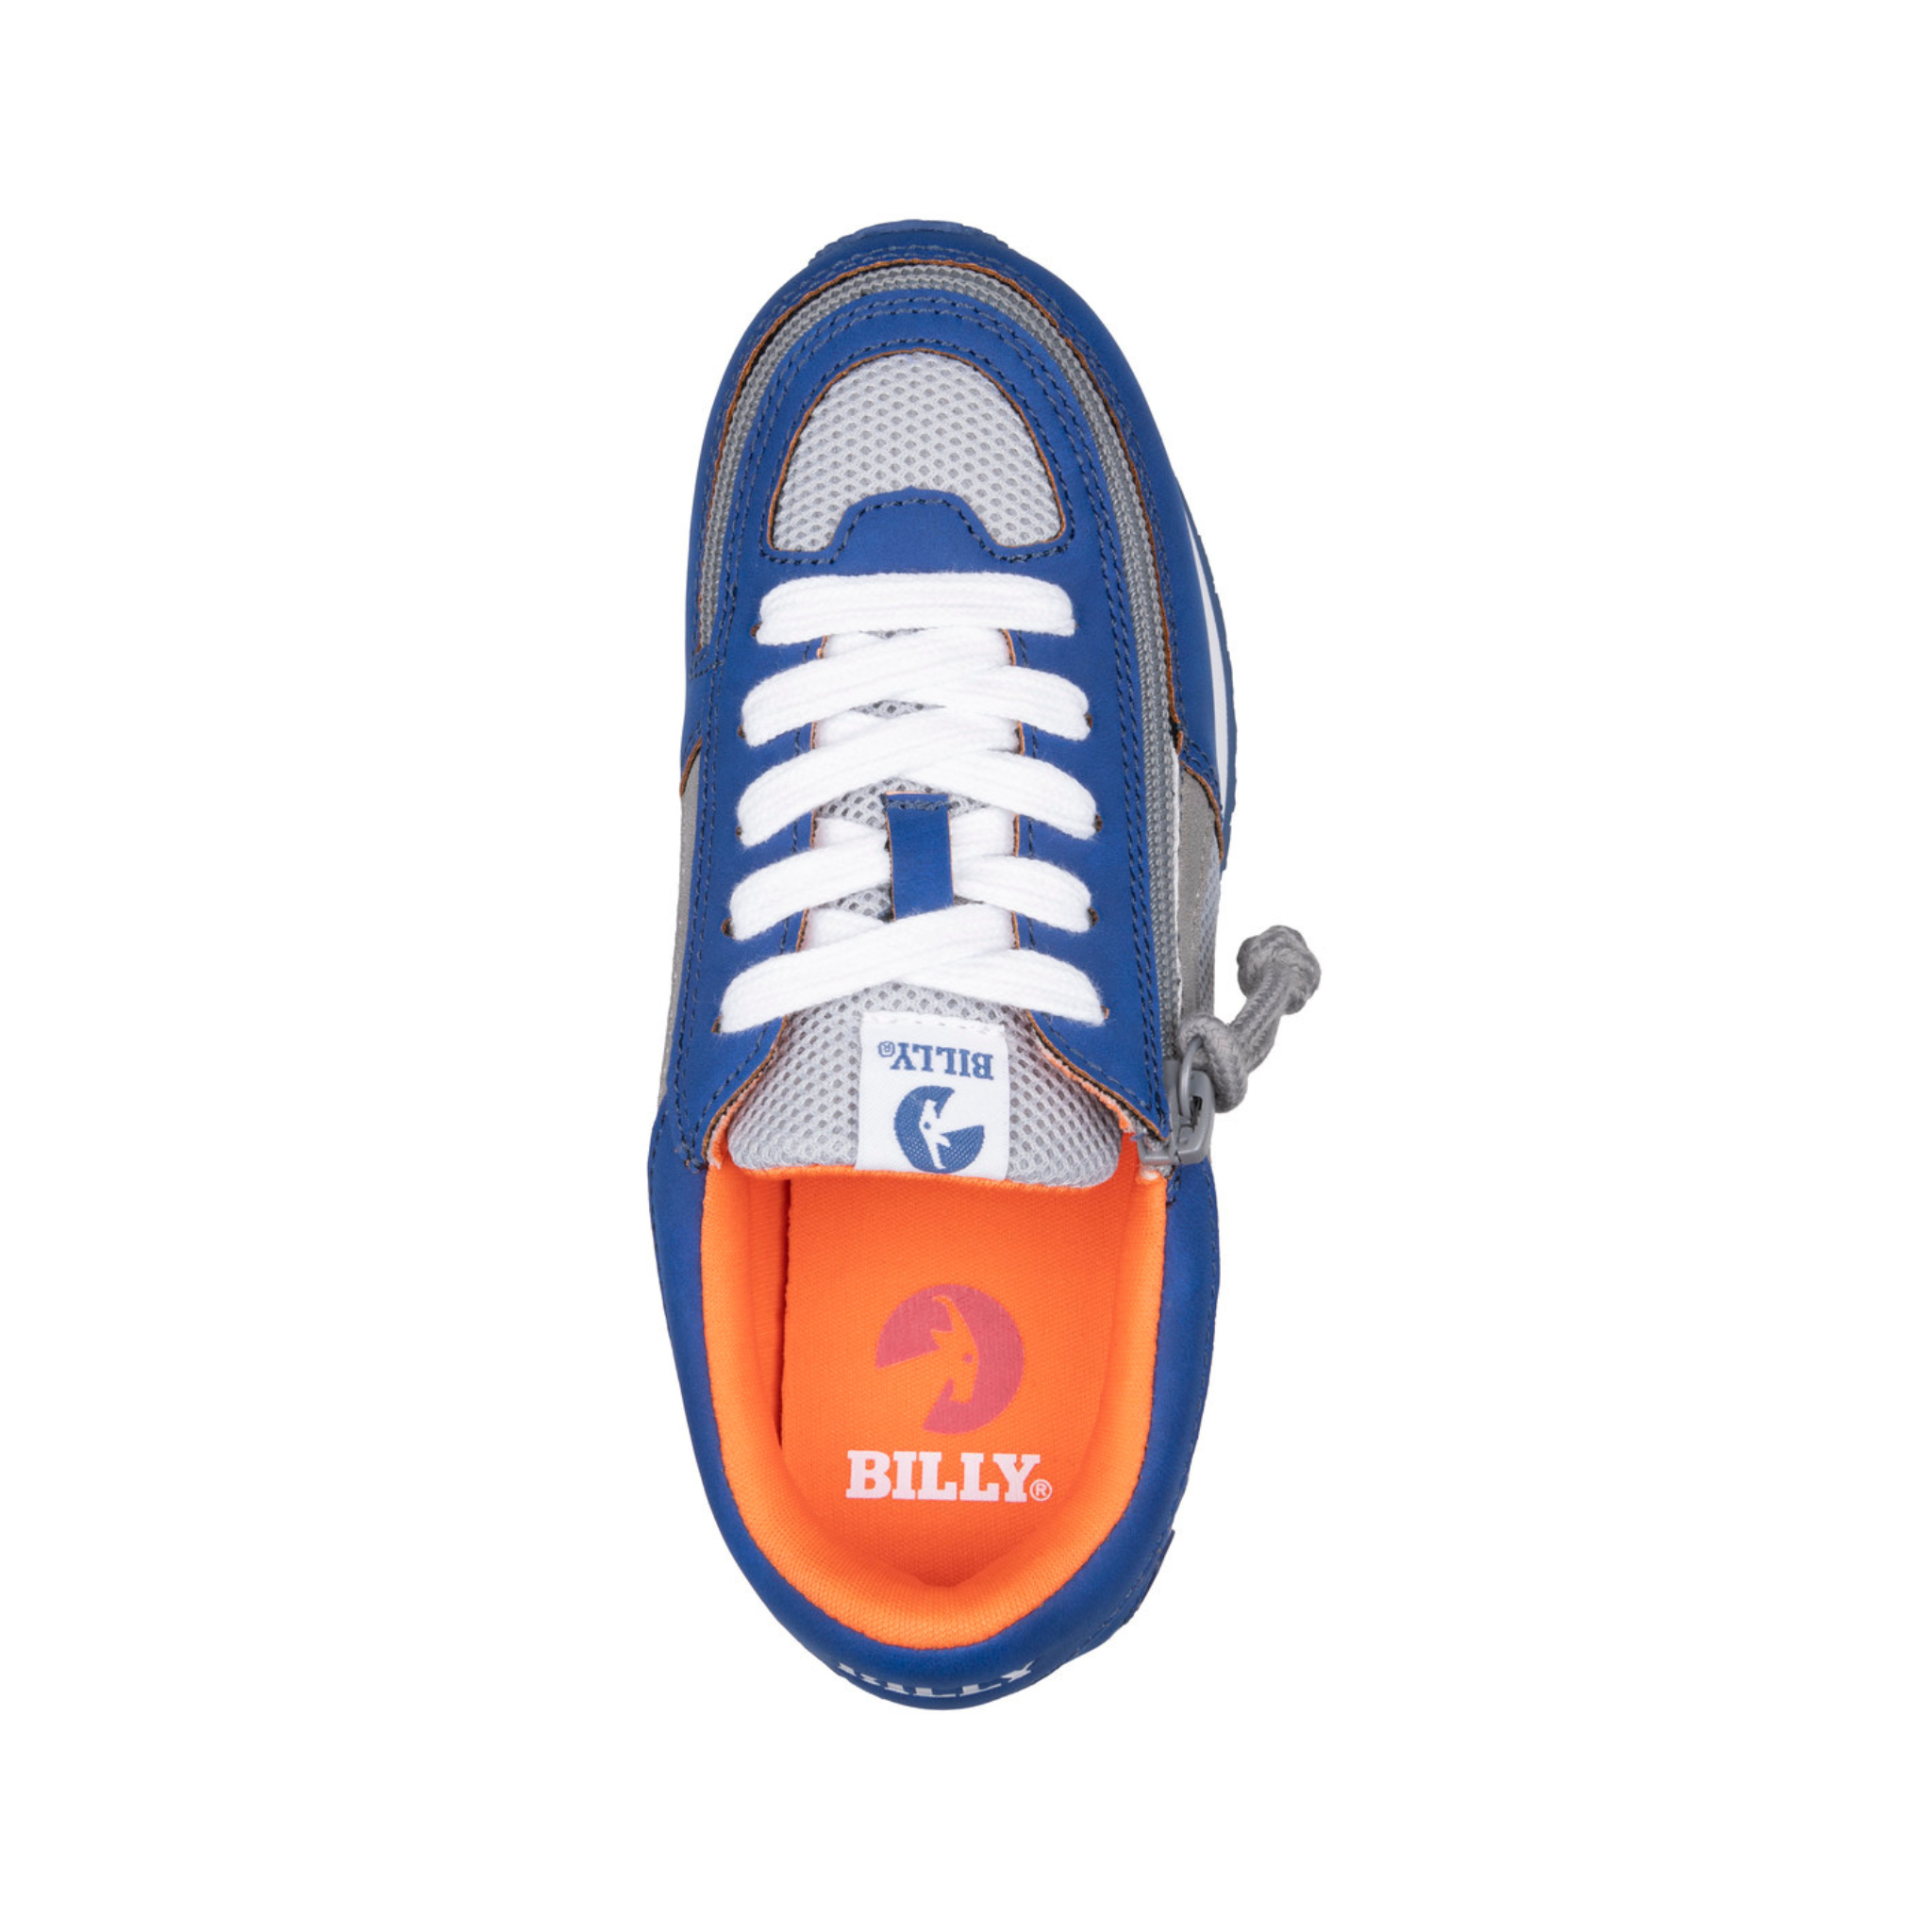 Billy Footwear (Toddlers) - Navy / Orange Faux Suede Trainers